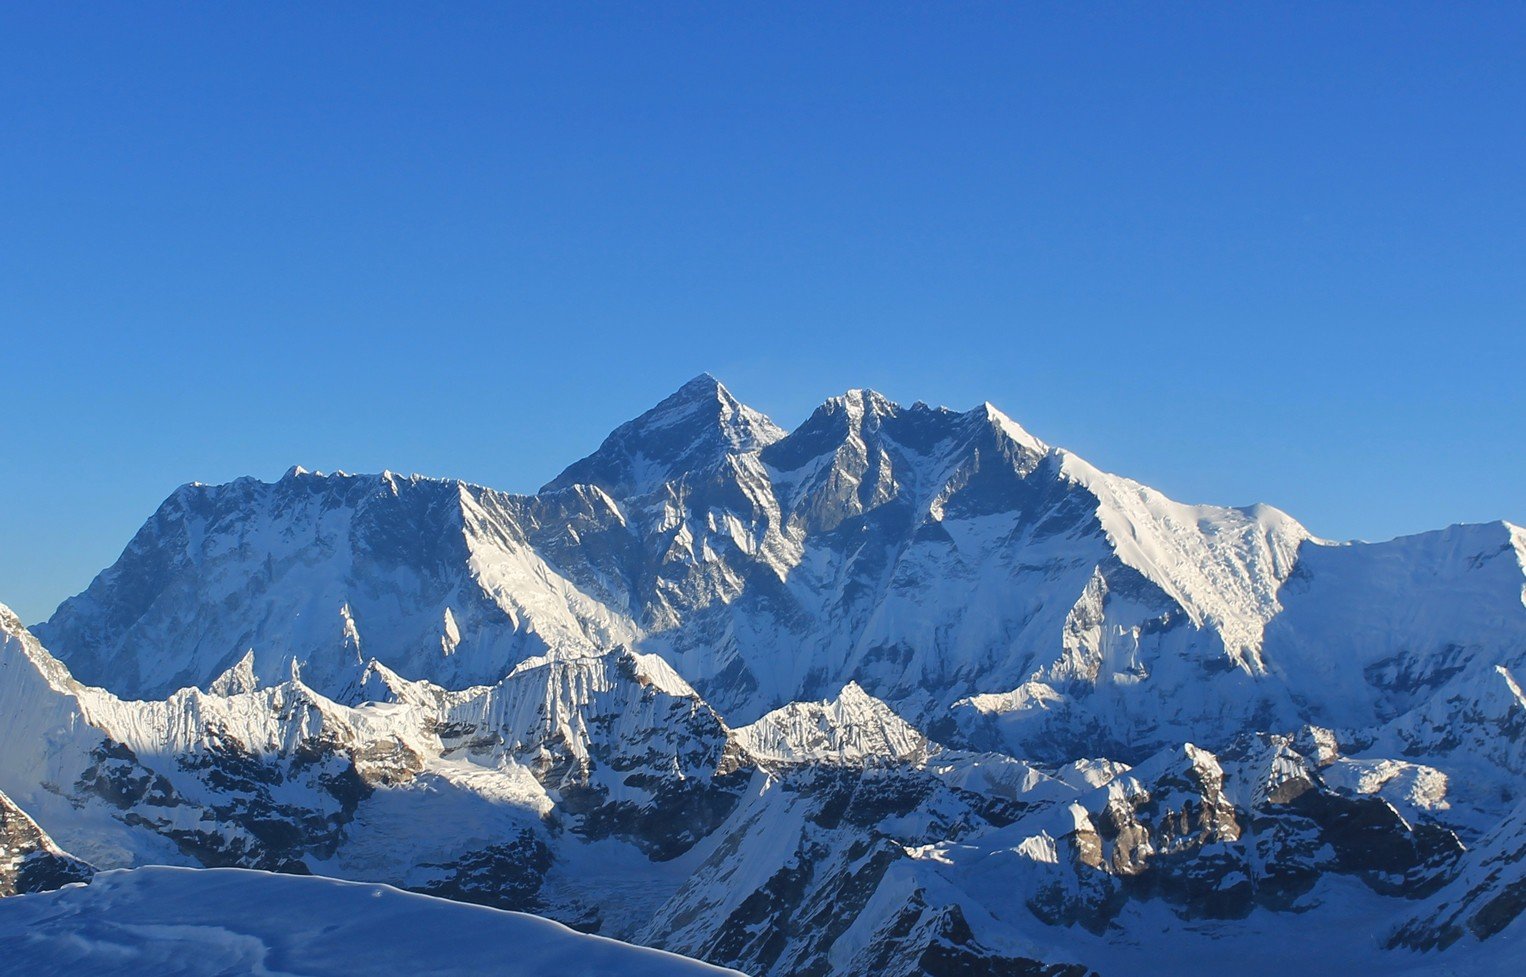 Everest Experience flight: Scenic flights in Nepal